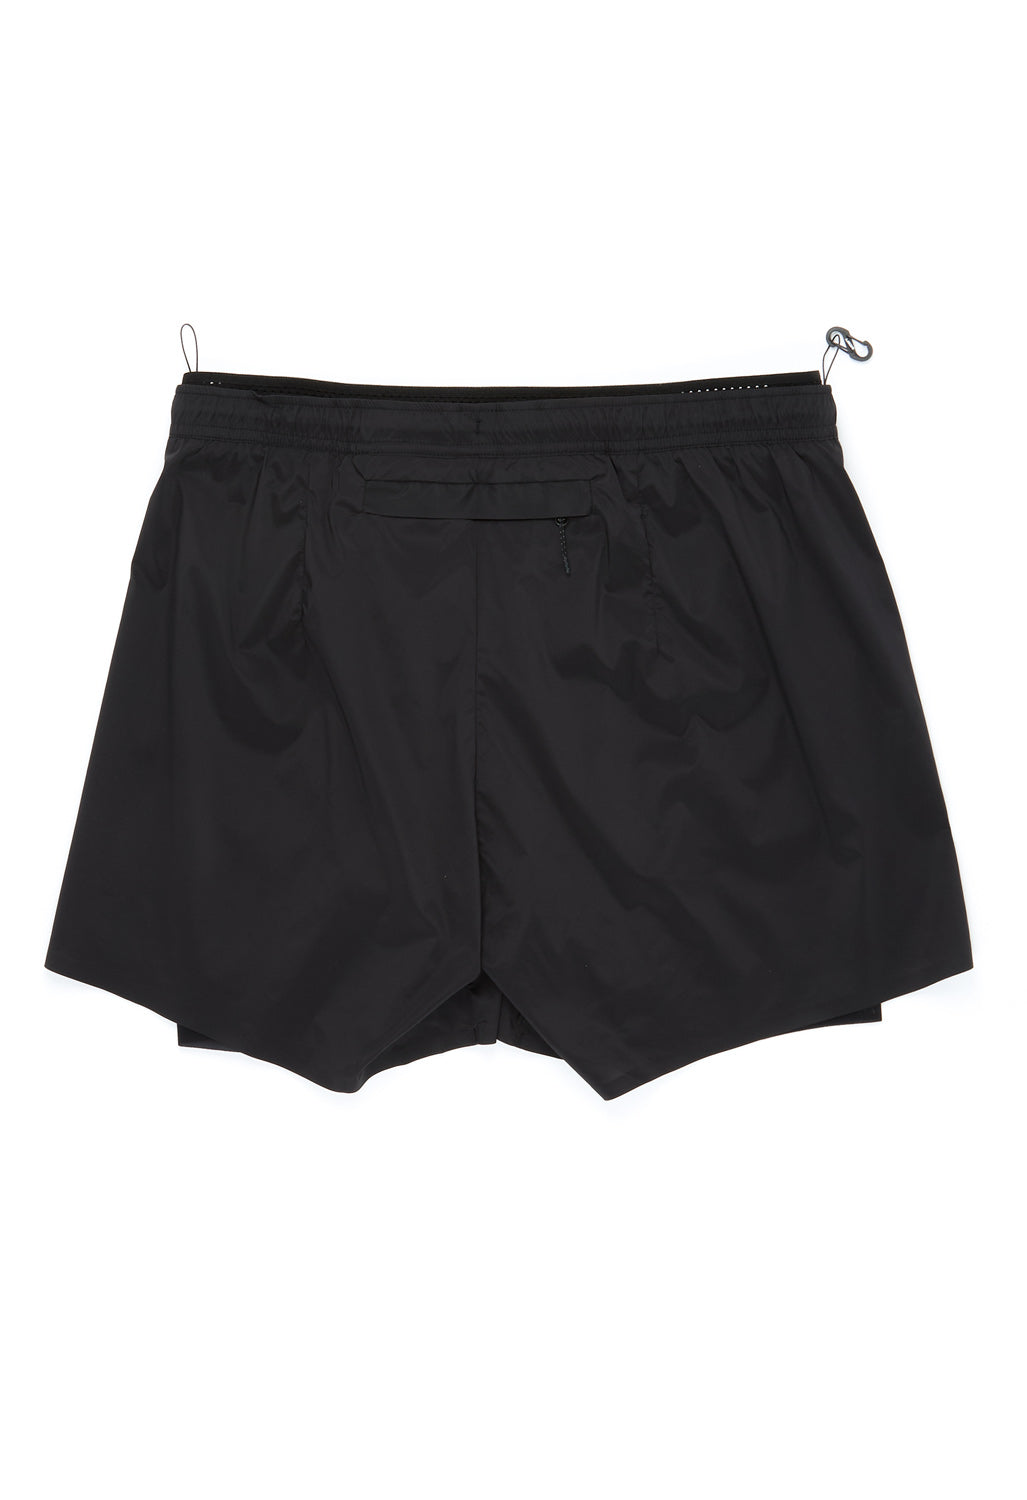 Satisfy Men's TechSilk 5" Shorts - Black